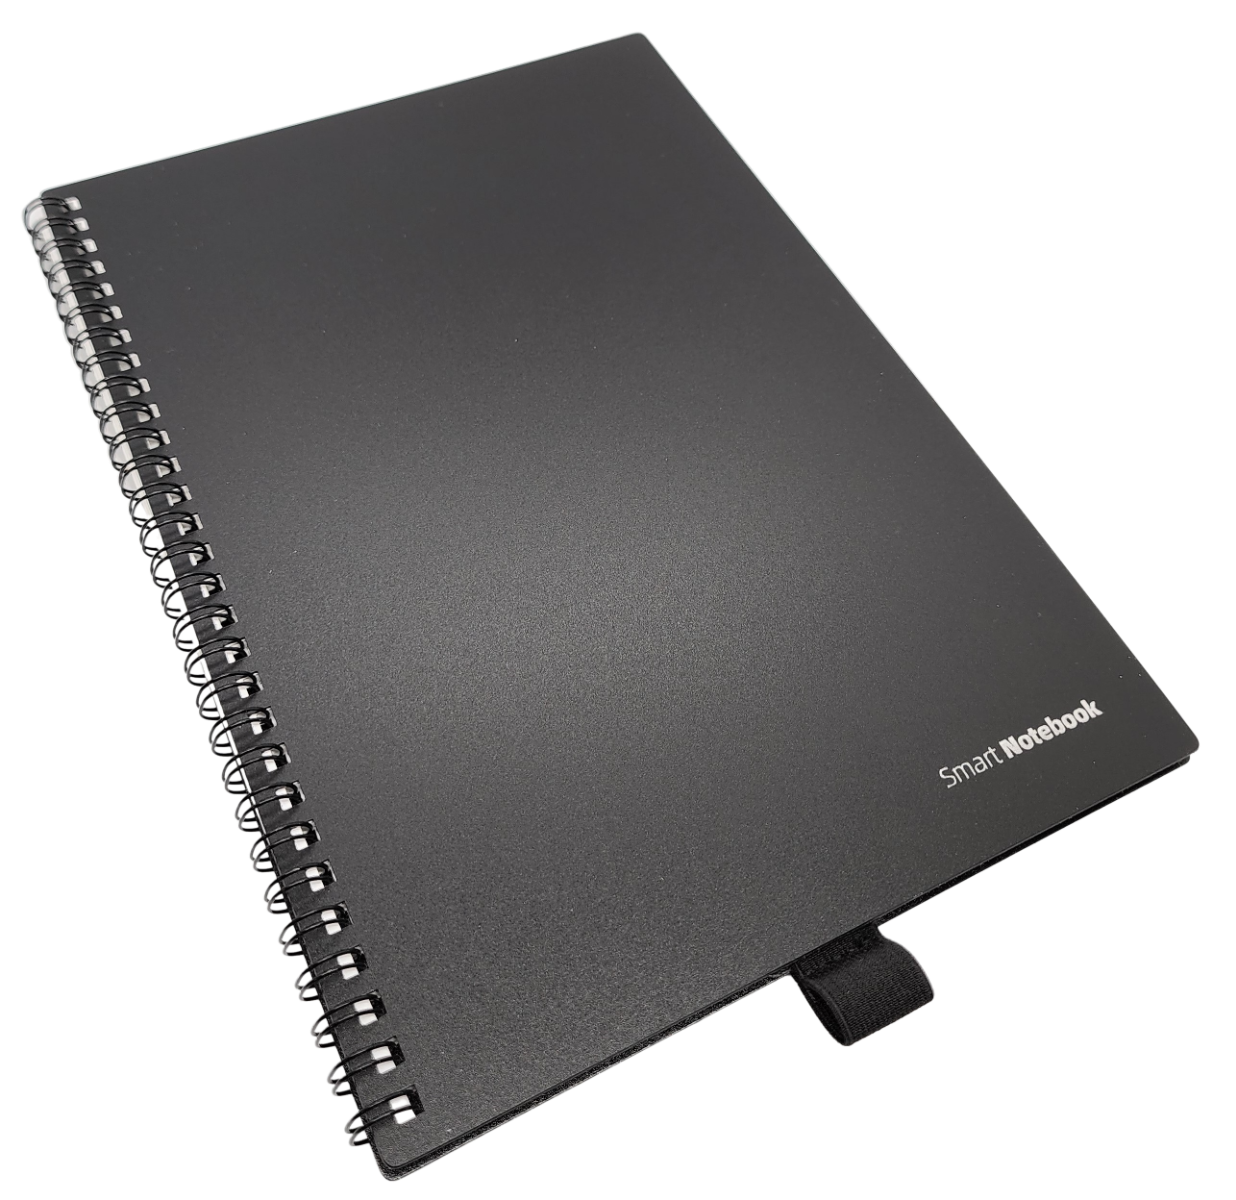 Campus Sophisticate B5 Reusable Smart Notebook